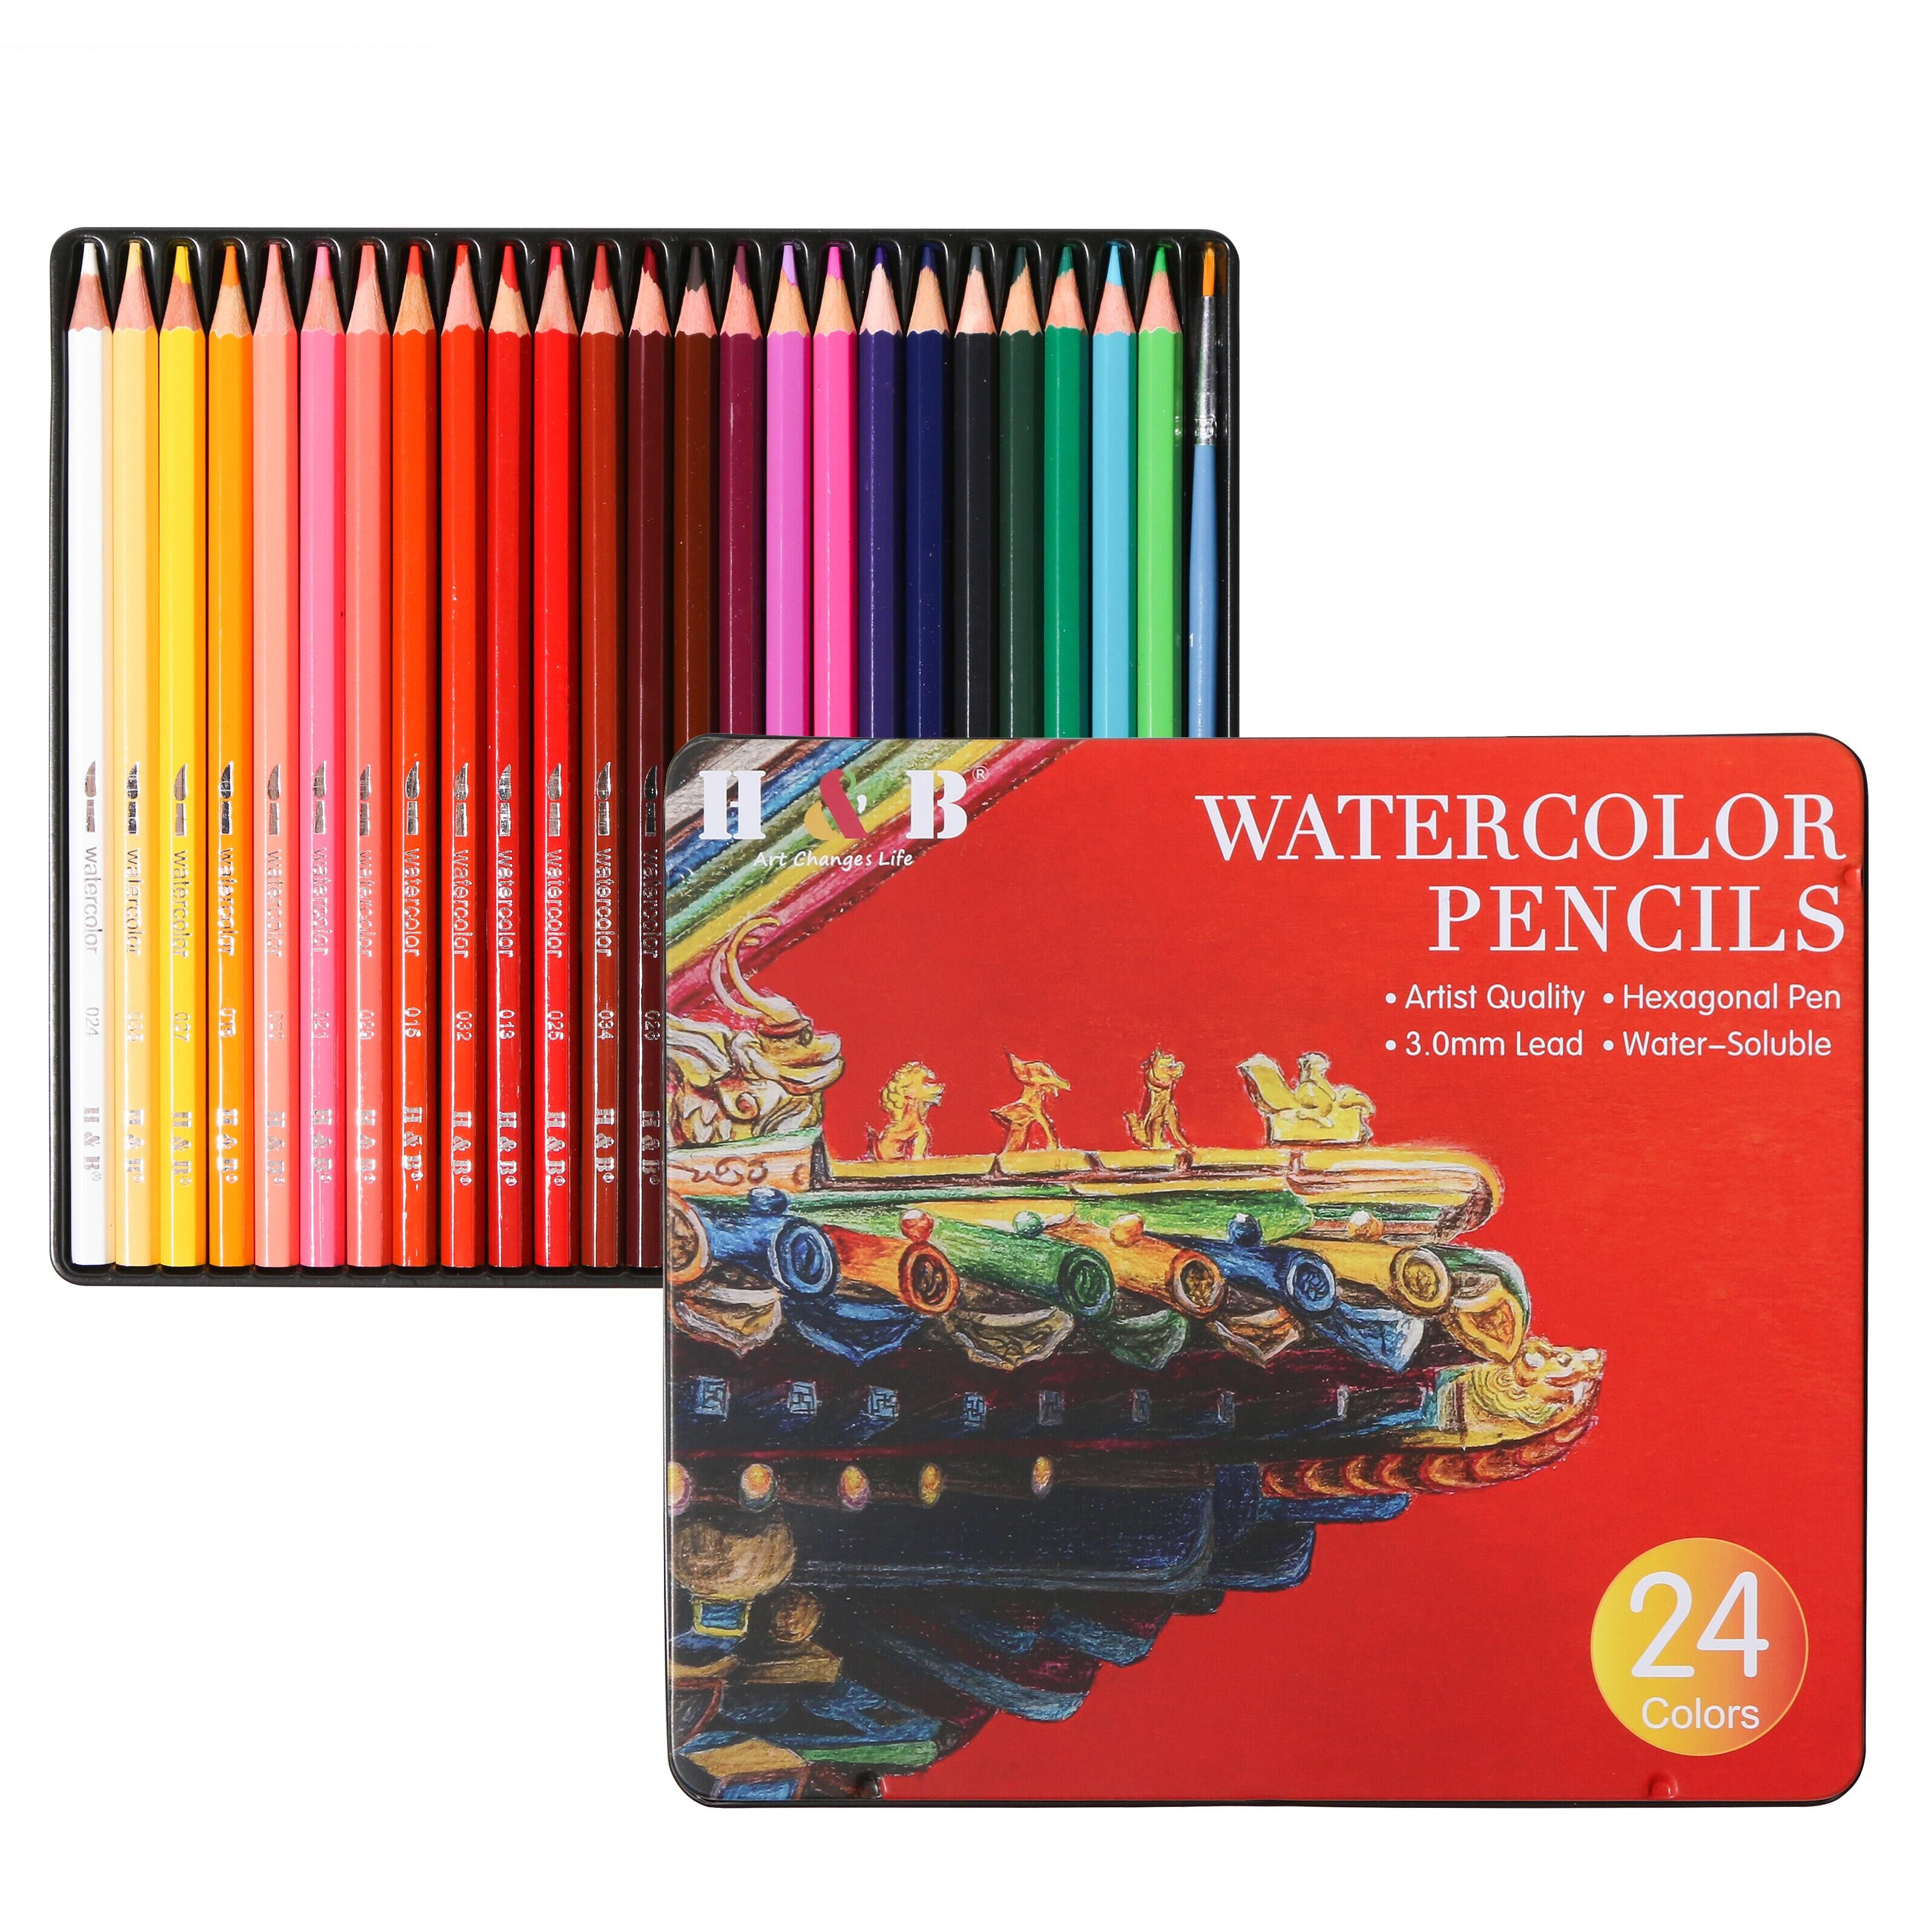 Professional Drawing Watercolor Pencils